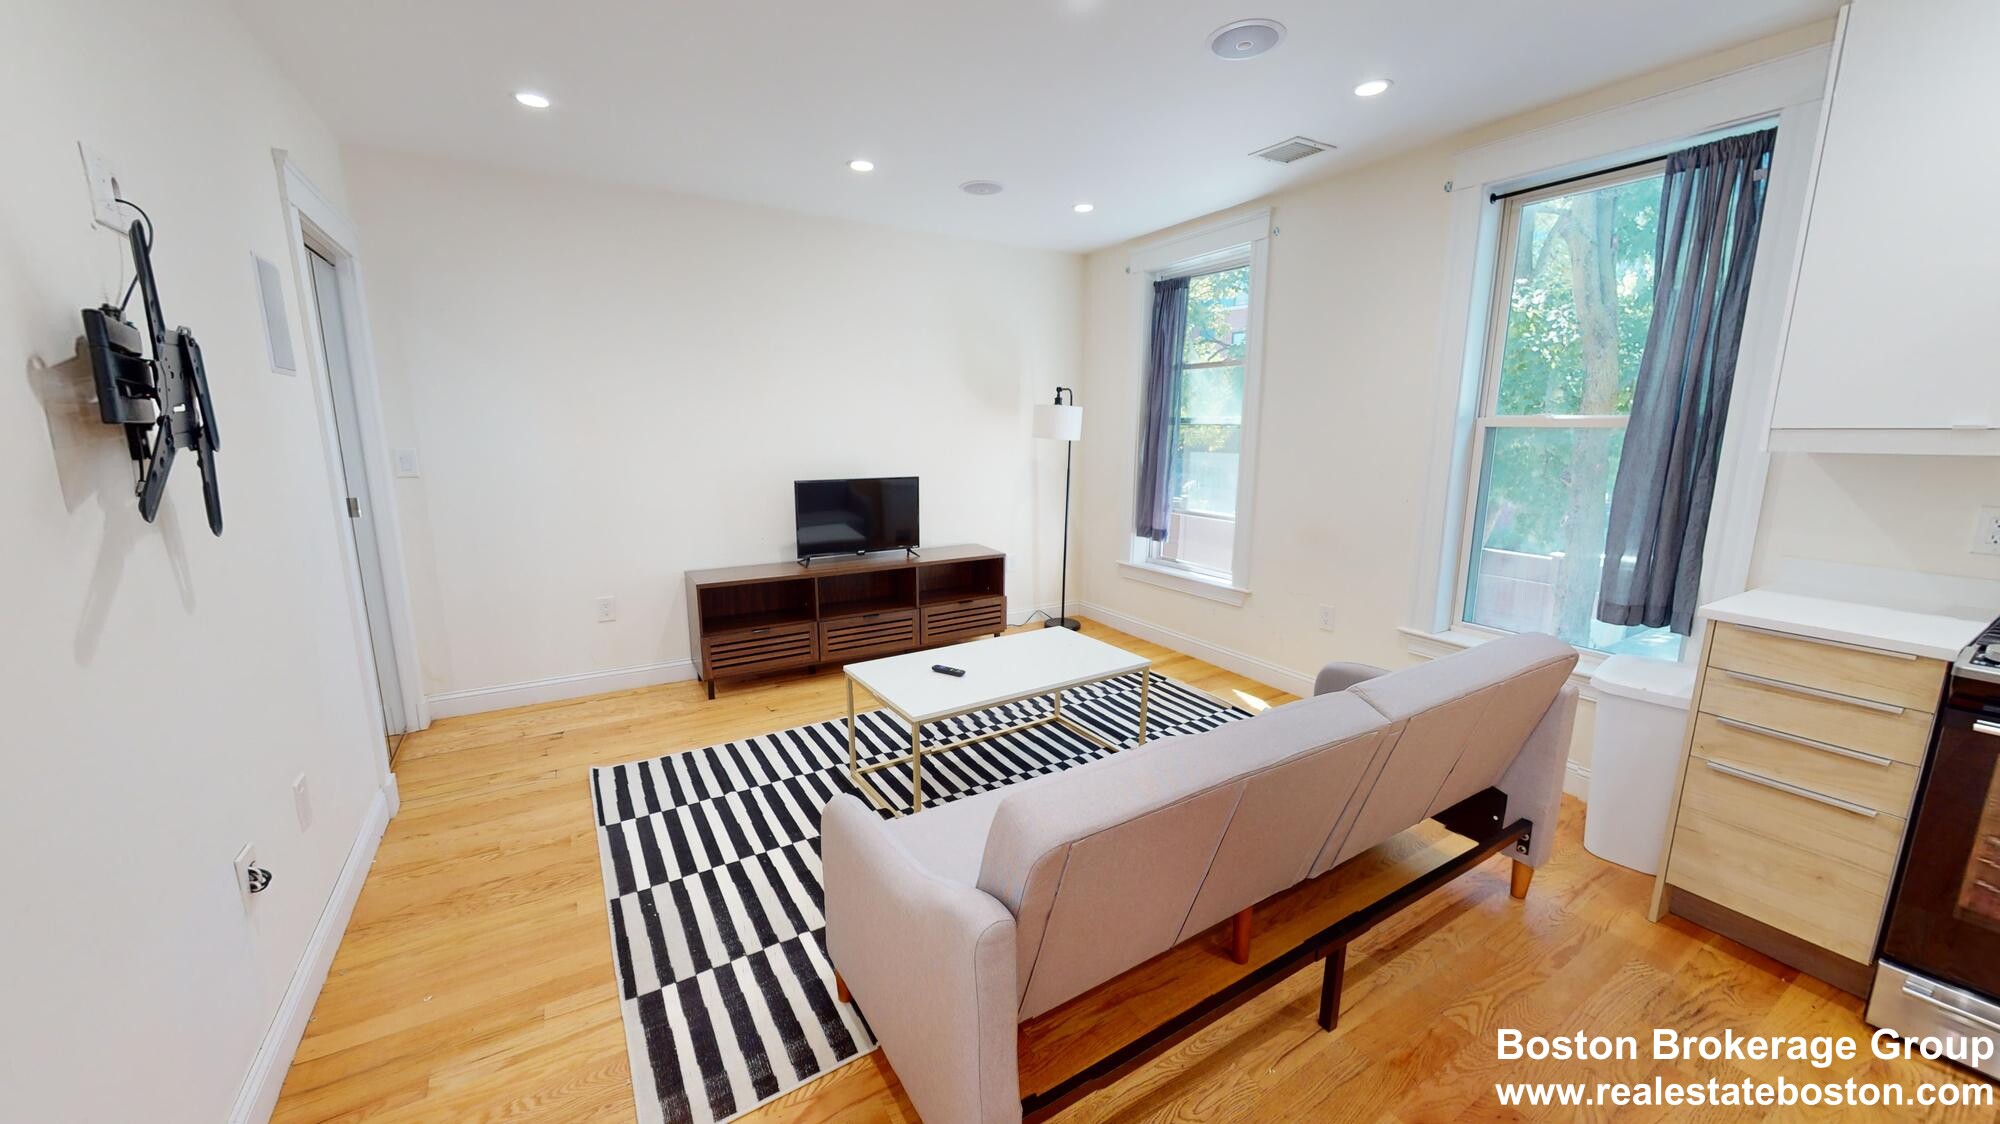 Photos of apartment on Grant St.,Boston MA 02125